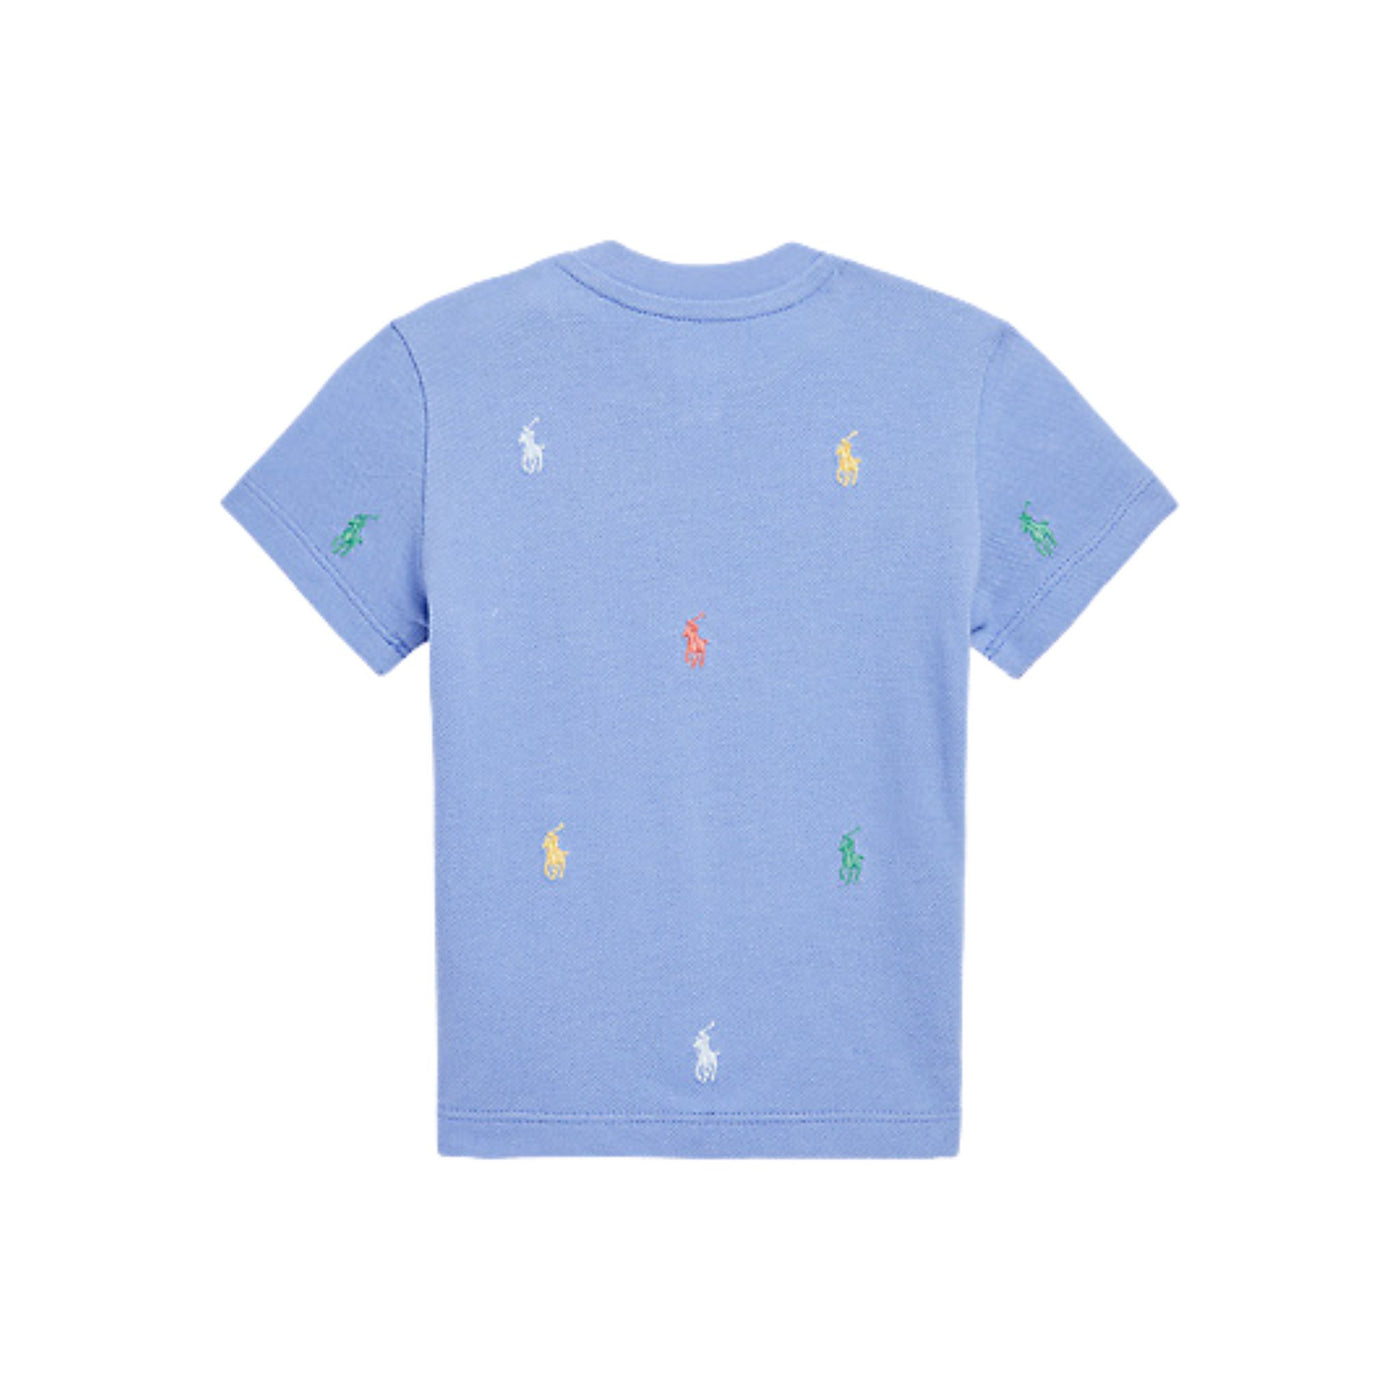 T-shirt neonato celeste firmata Polo Ralph Lauren vista retro